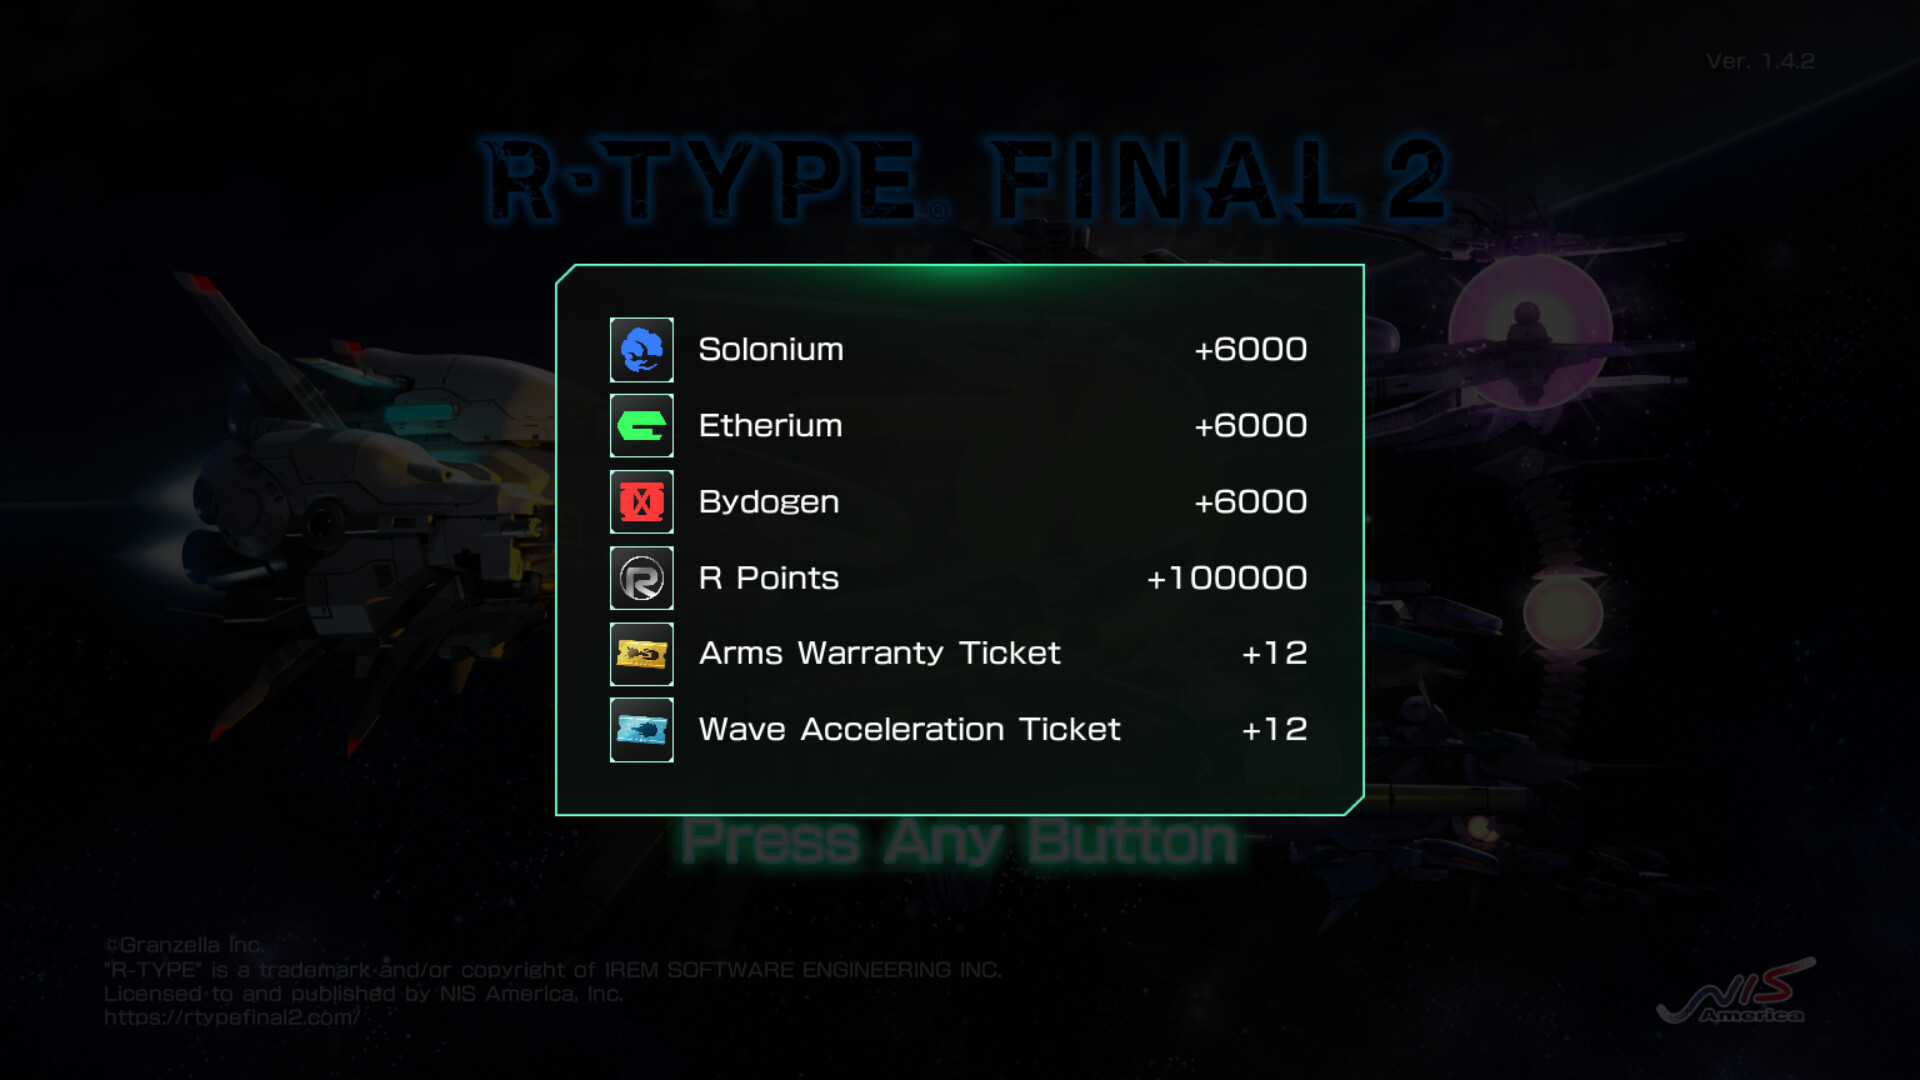 R-Type Final 2 - Ace Pilot Special Training Pack II DLC Steam CD Key 4.66 $